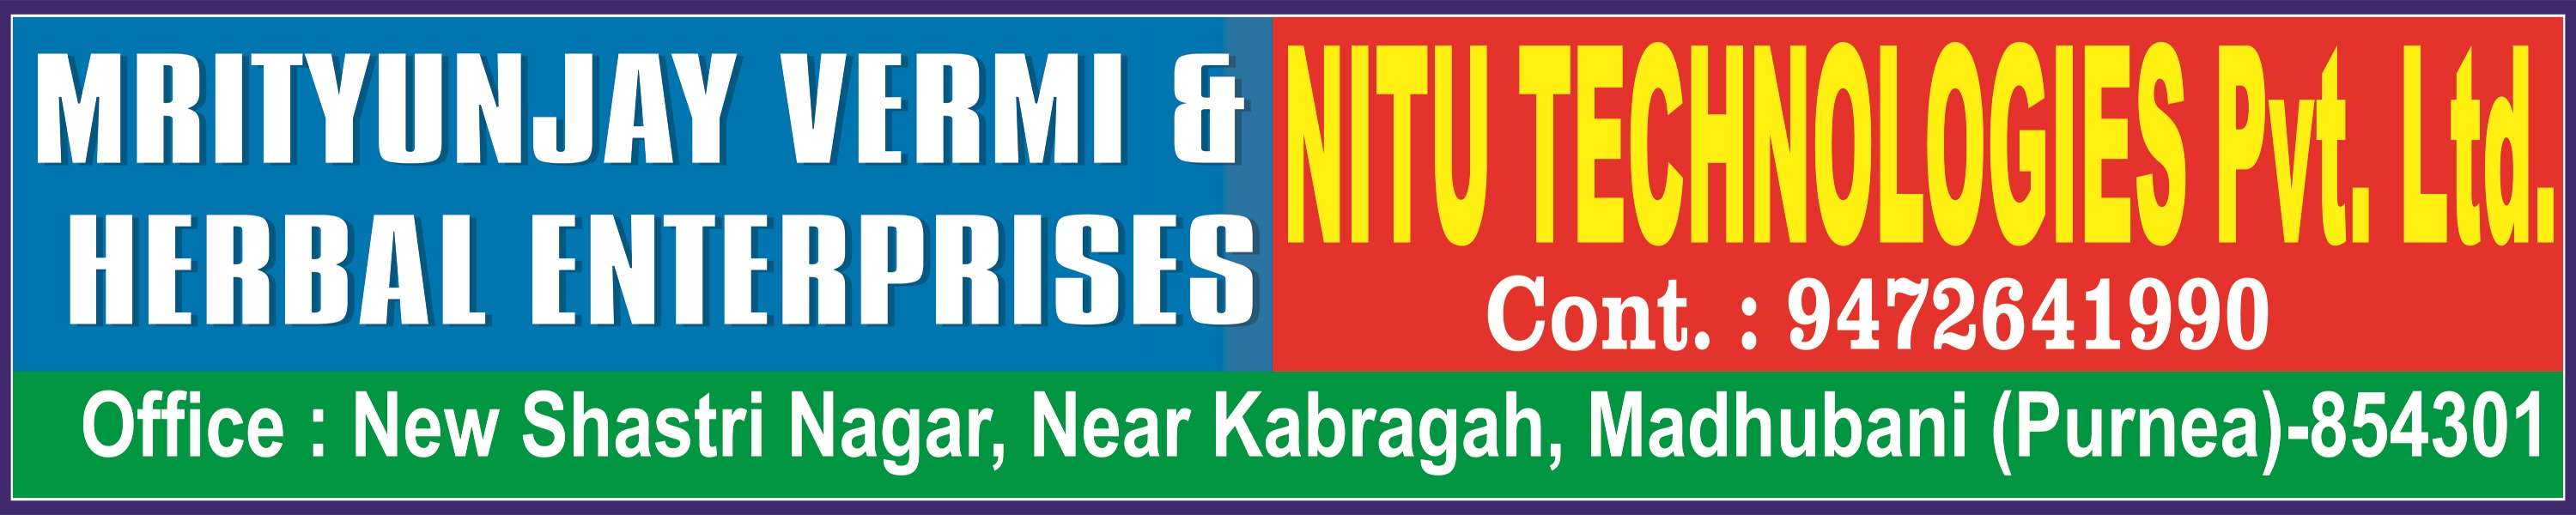 Nitu Technologies Private Limited (opc)